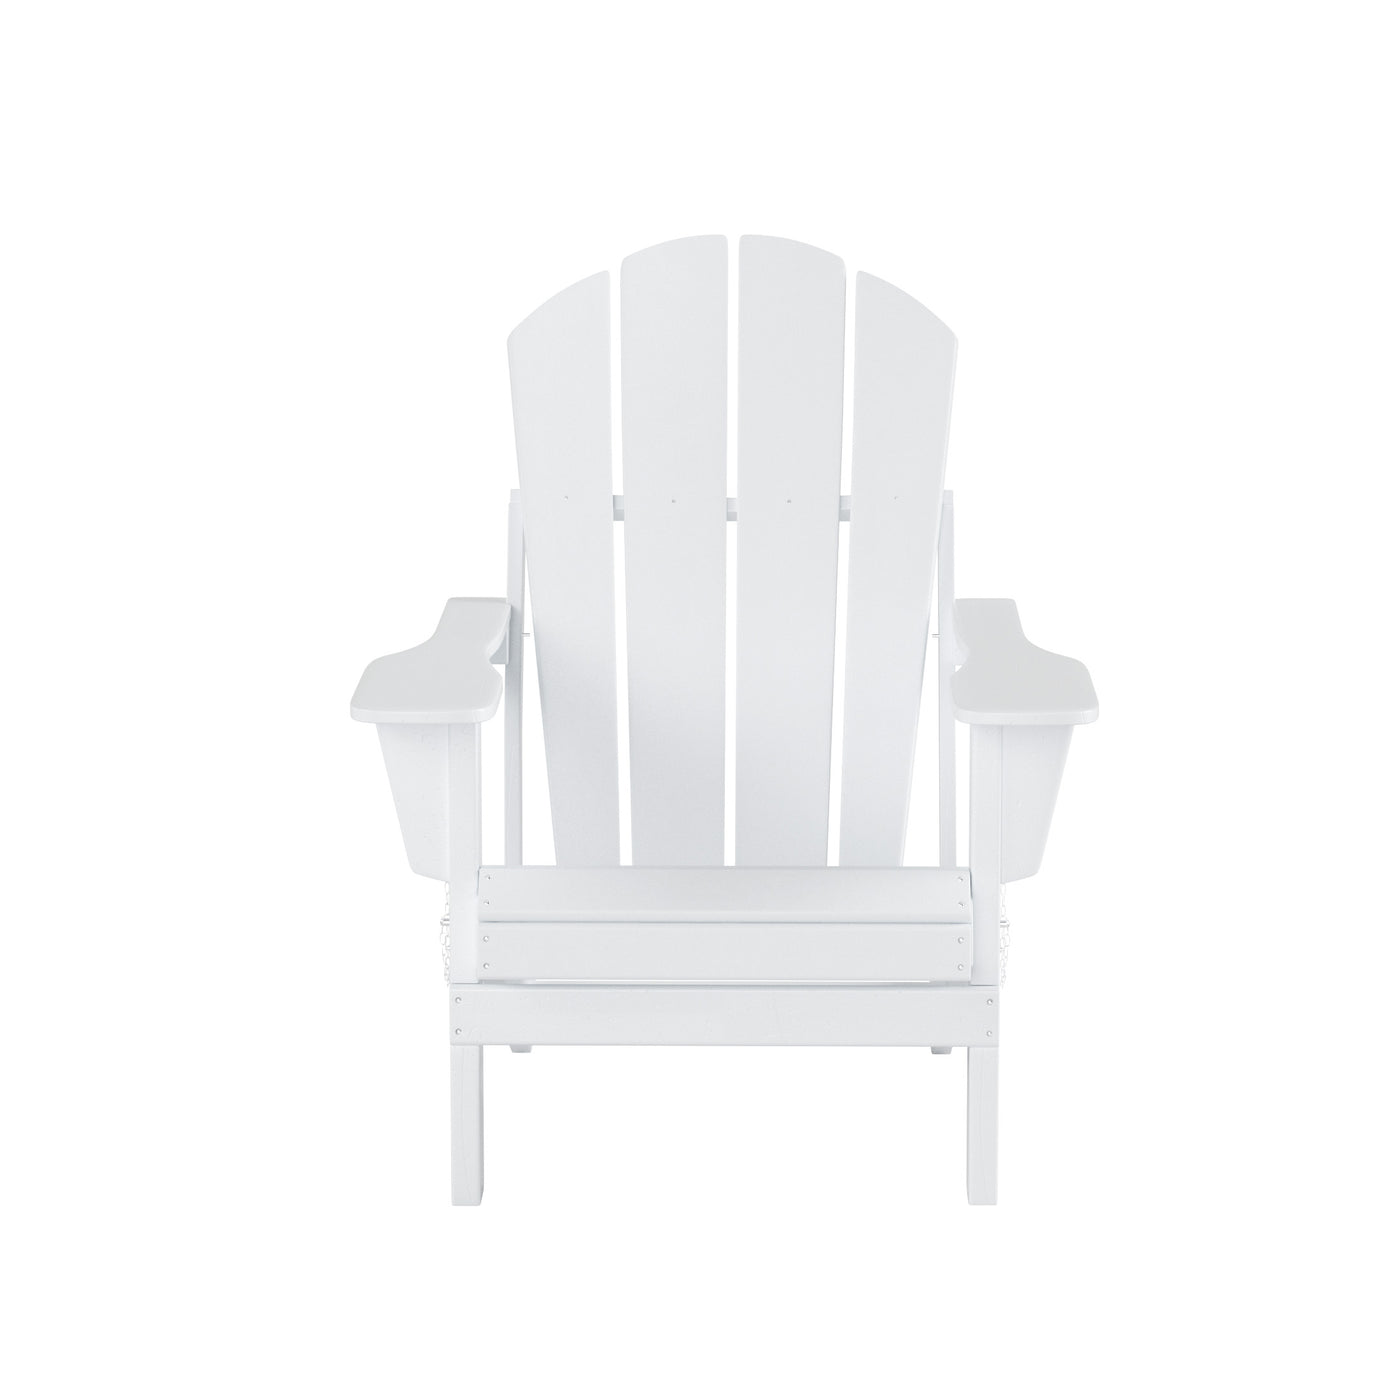 Malibu 5-Piece Classic Folding Adirondack Chair with Ottoman Side Table Set